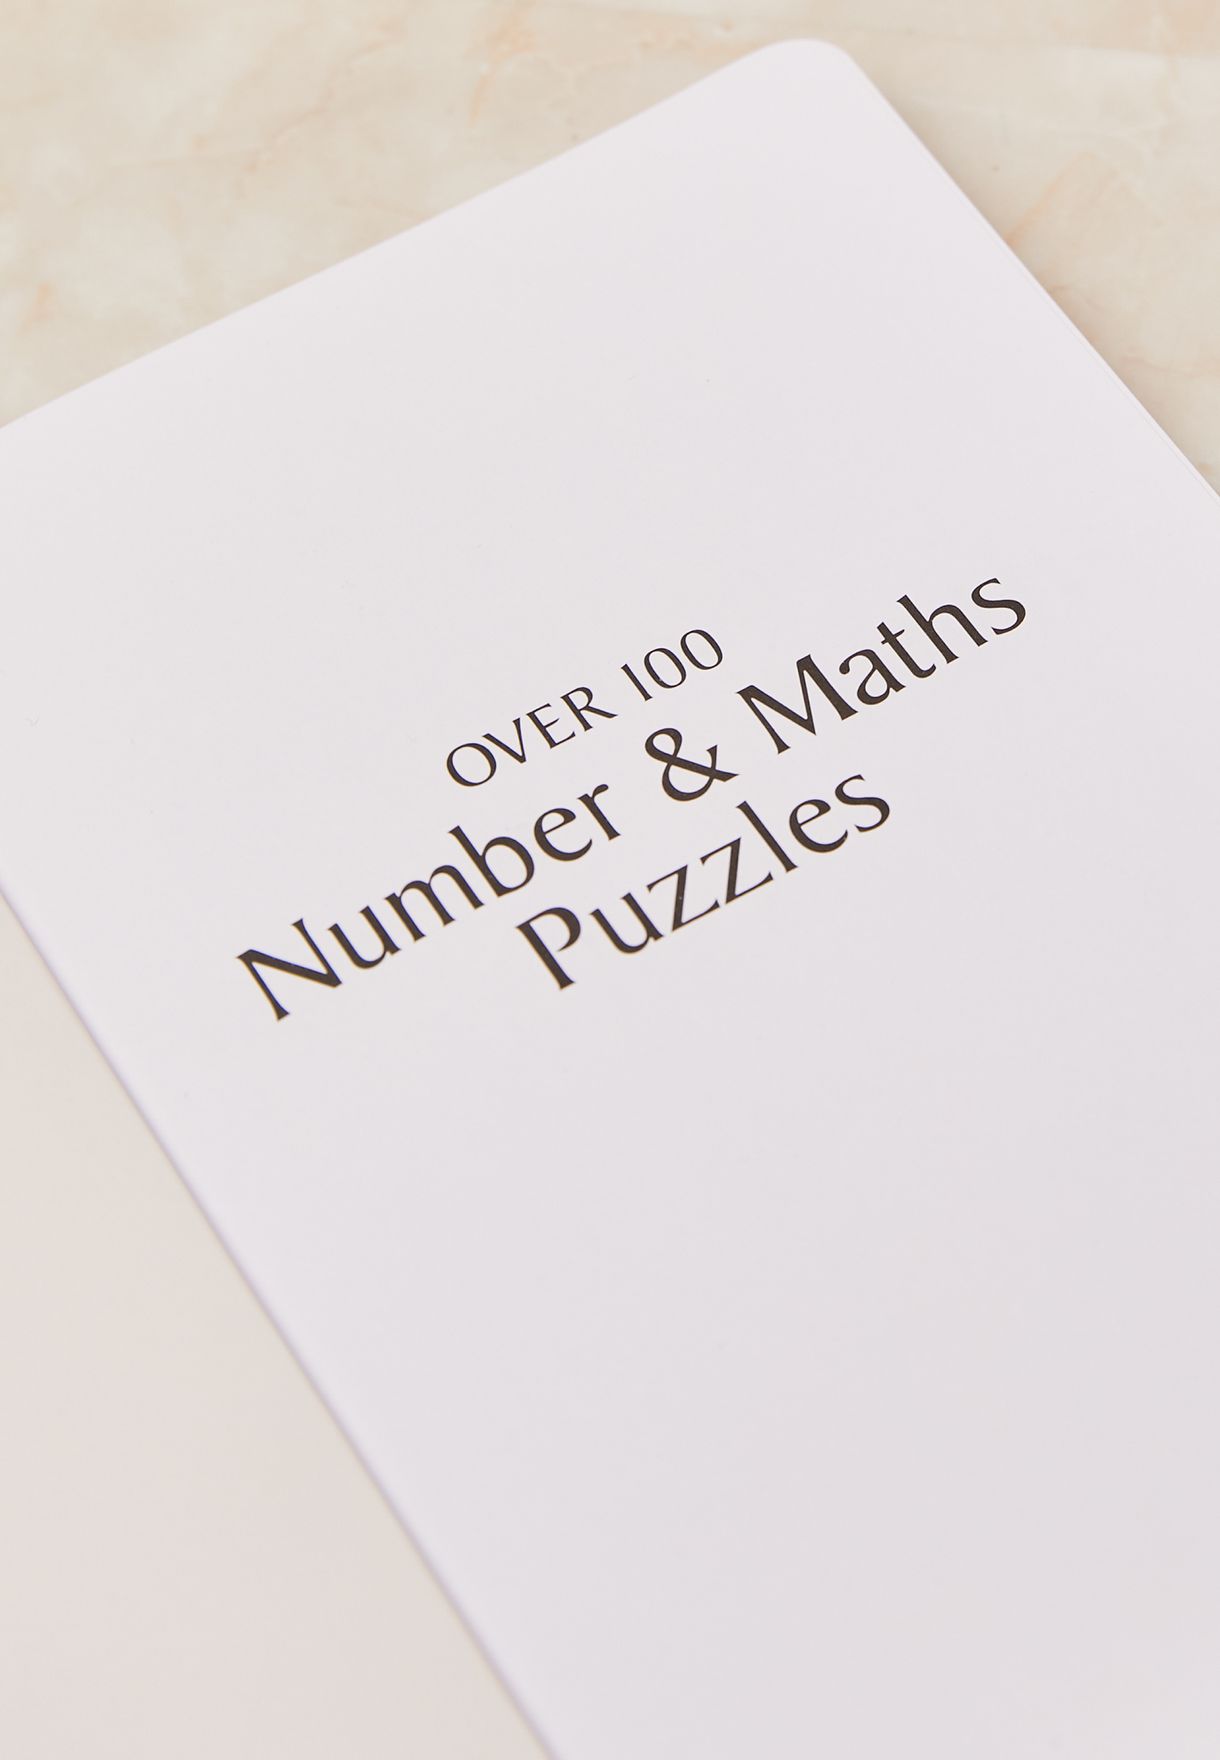 Geometrics Number & Maths Puzzles